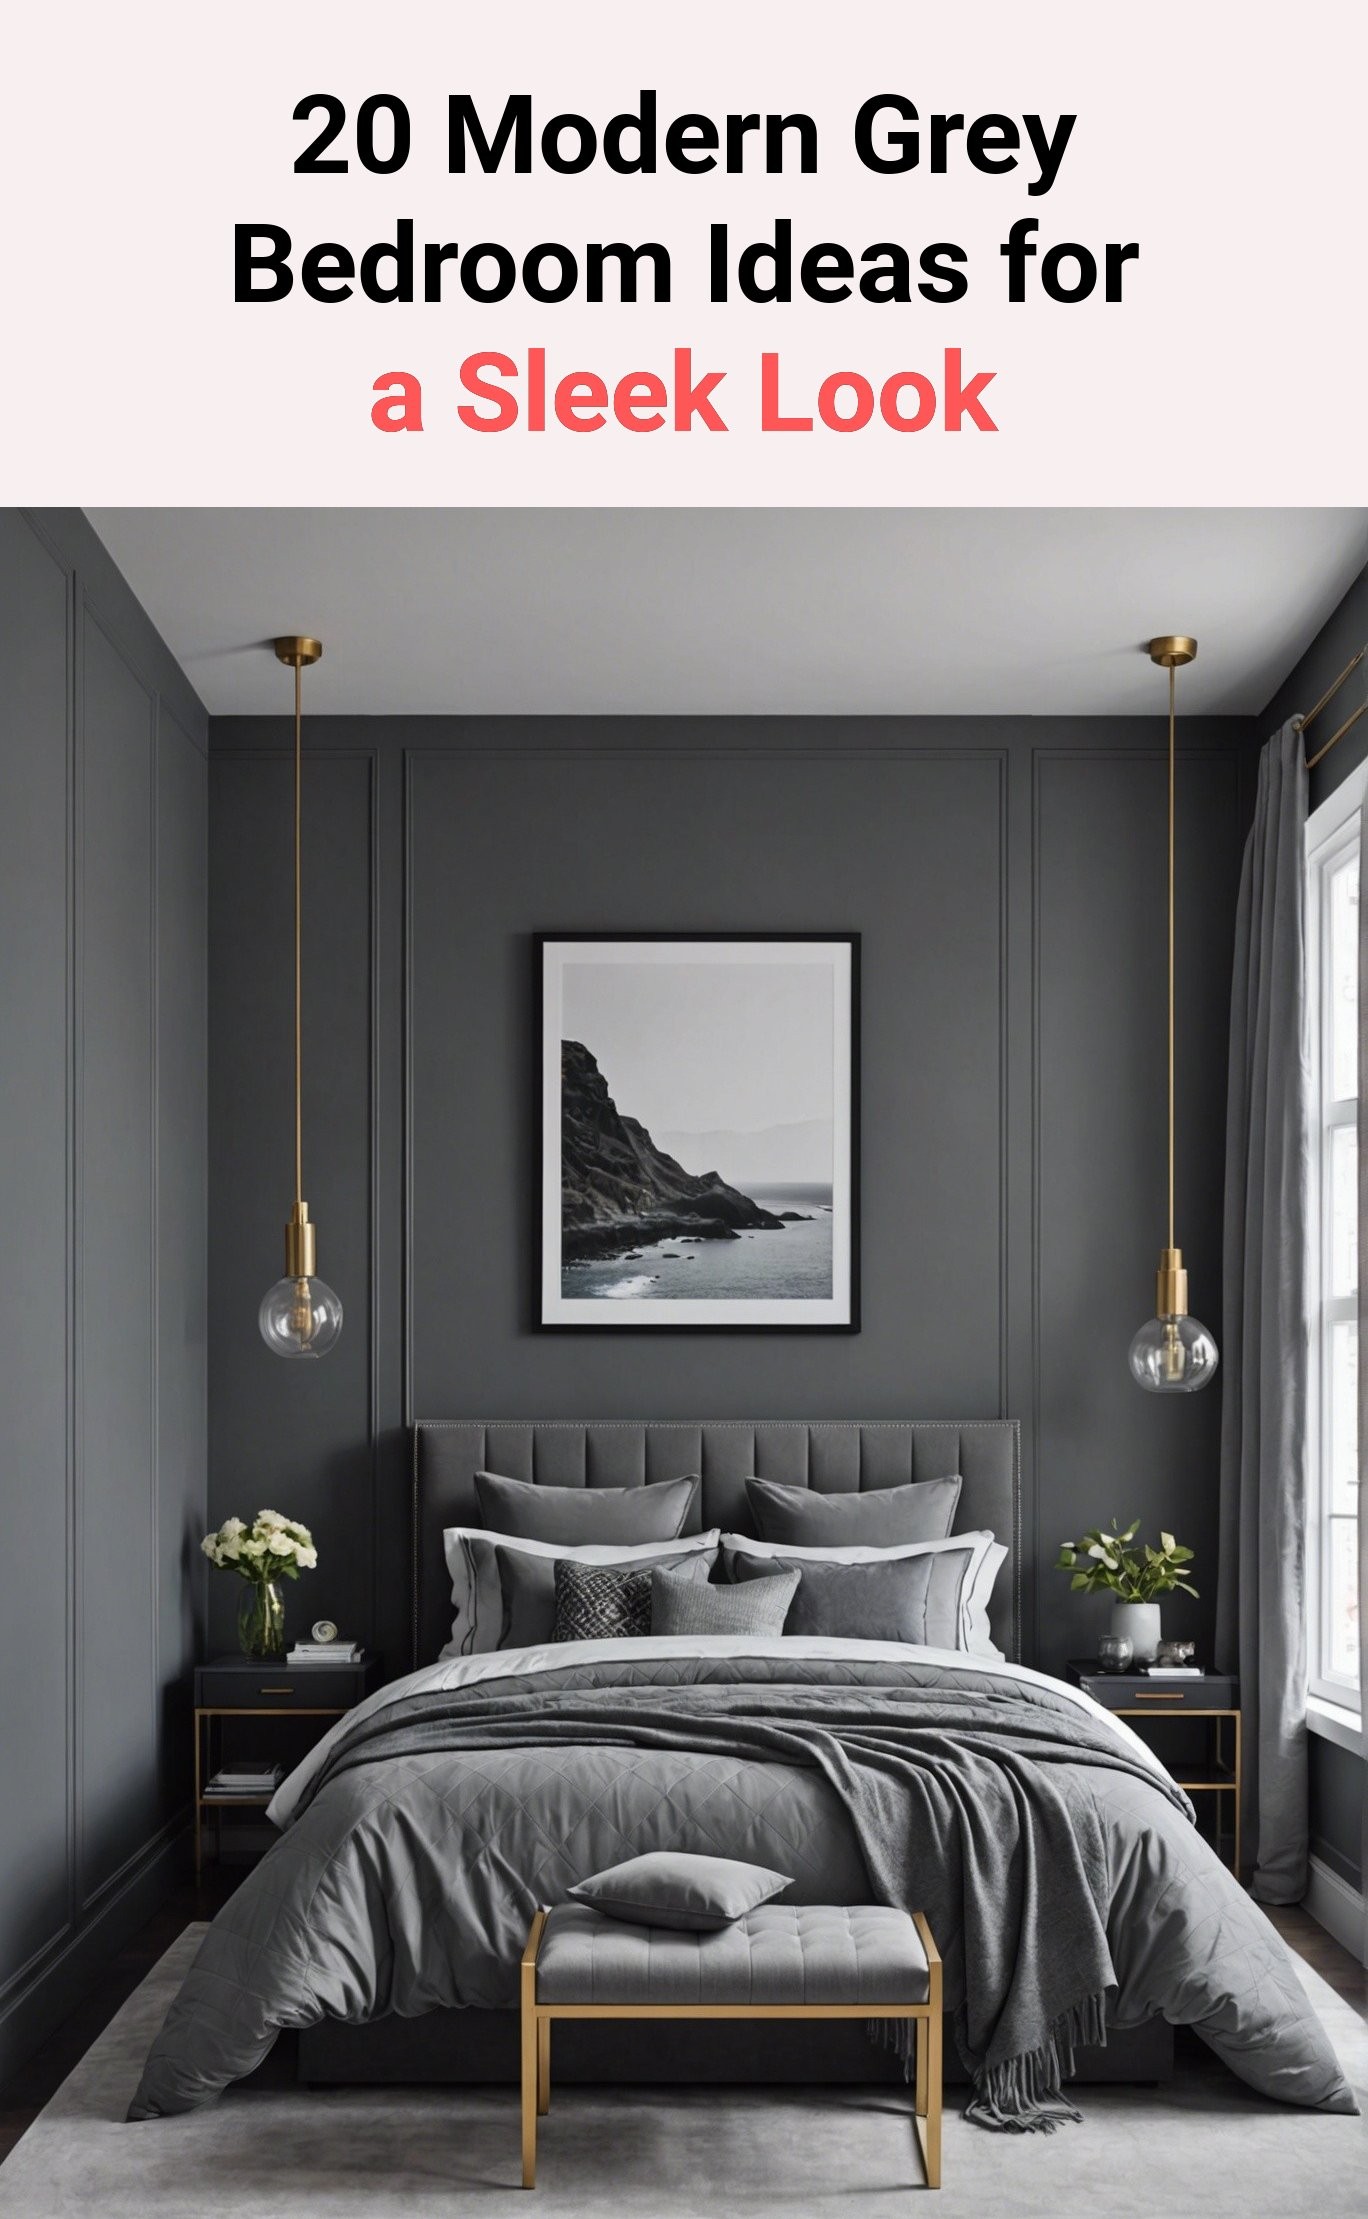 20 Modern Grey Bedroom Ideas for a Sleek Look